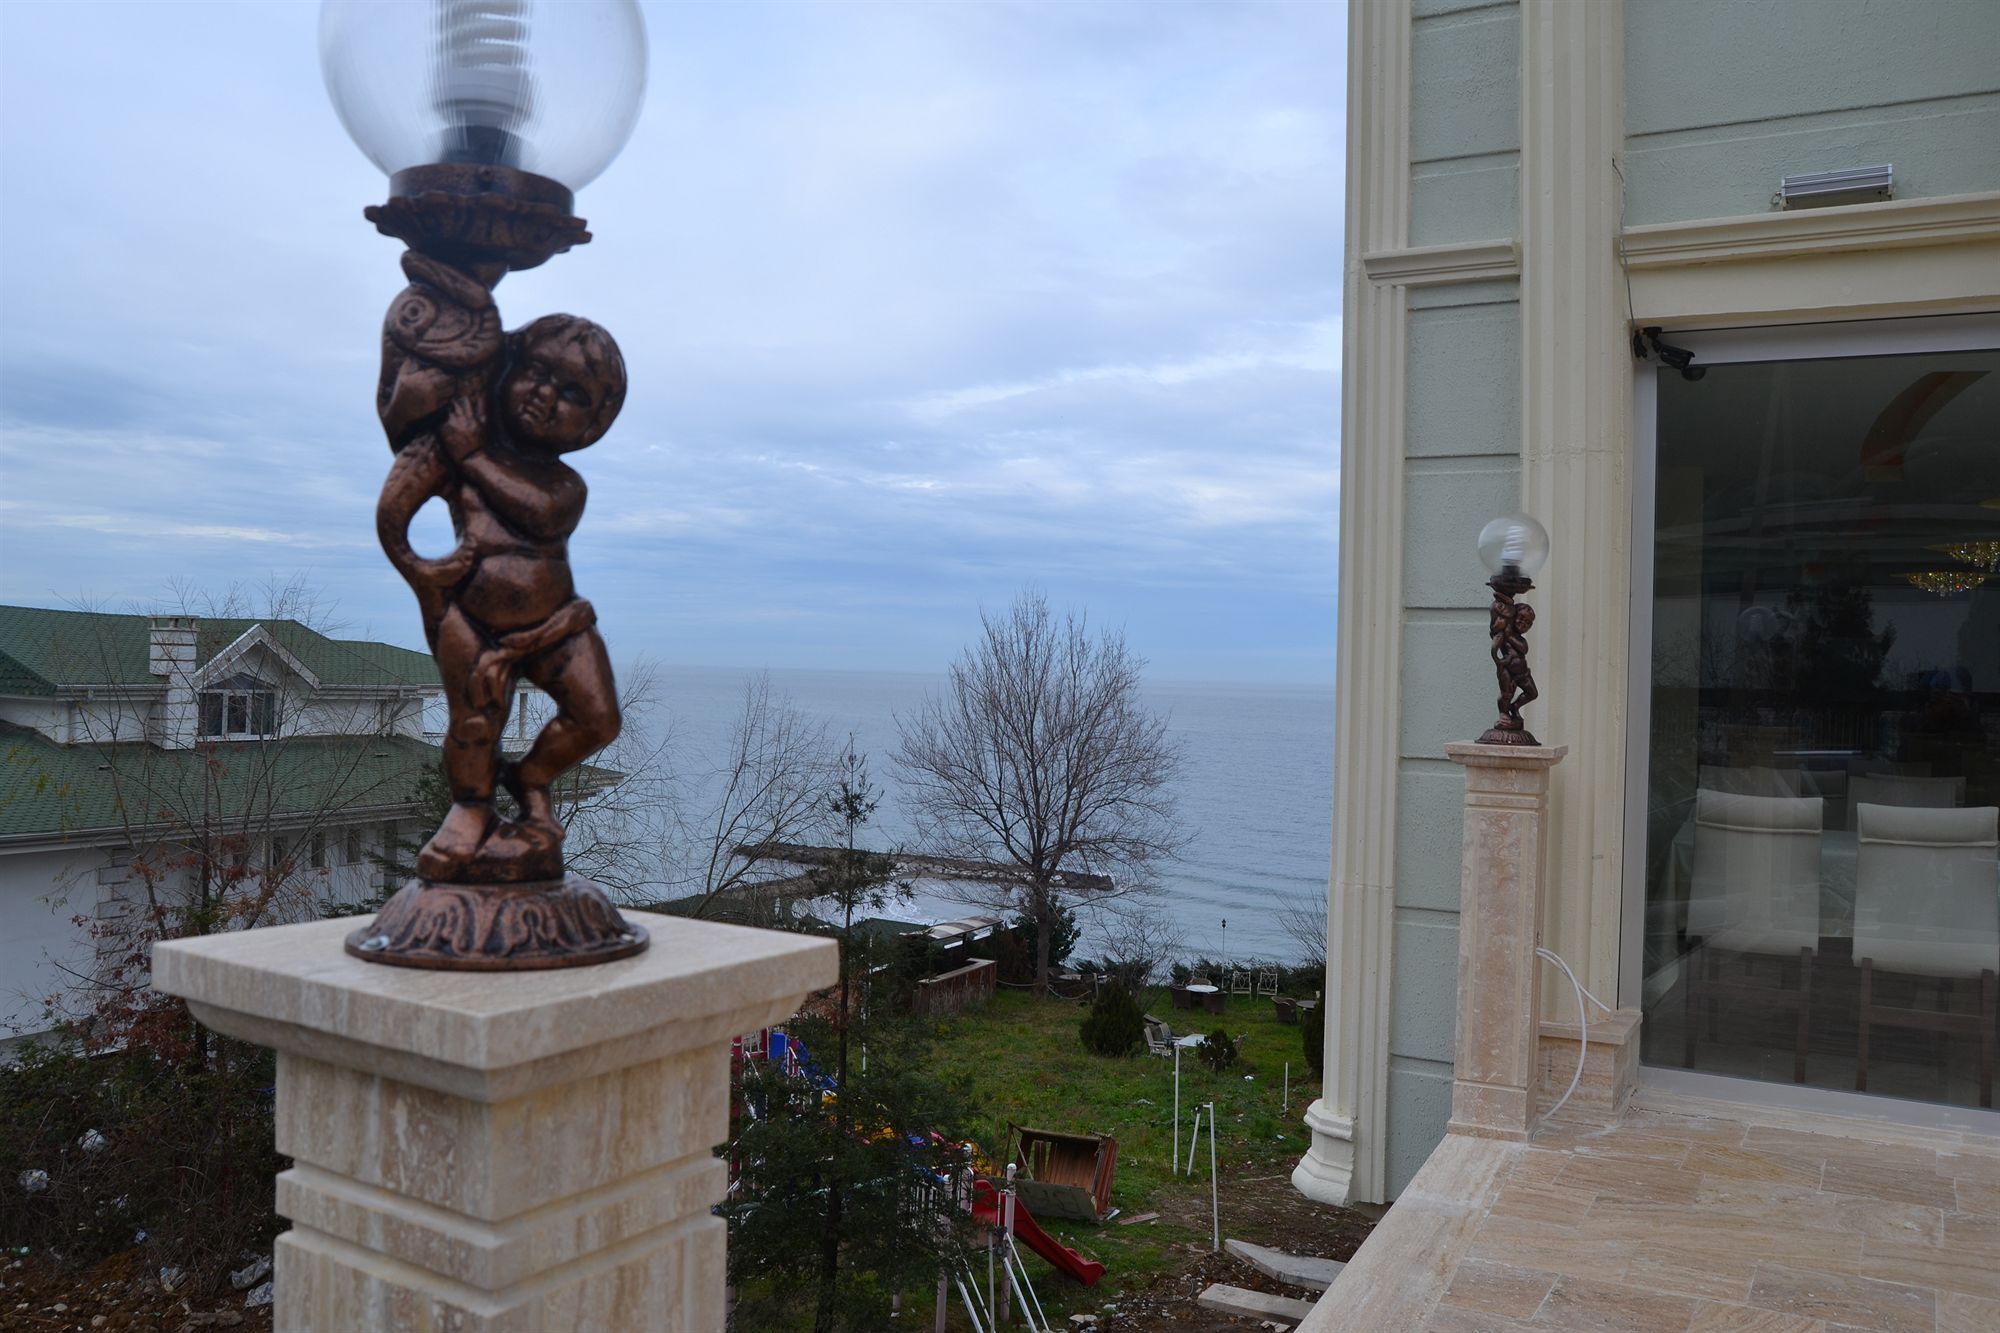 Fengo Hotel & Spa Trabzon Exterior photo